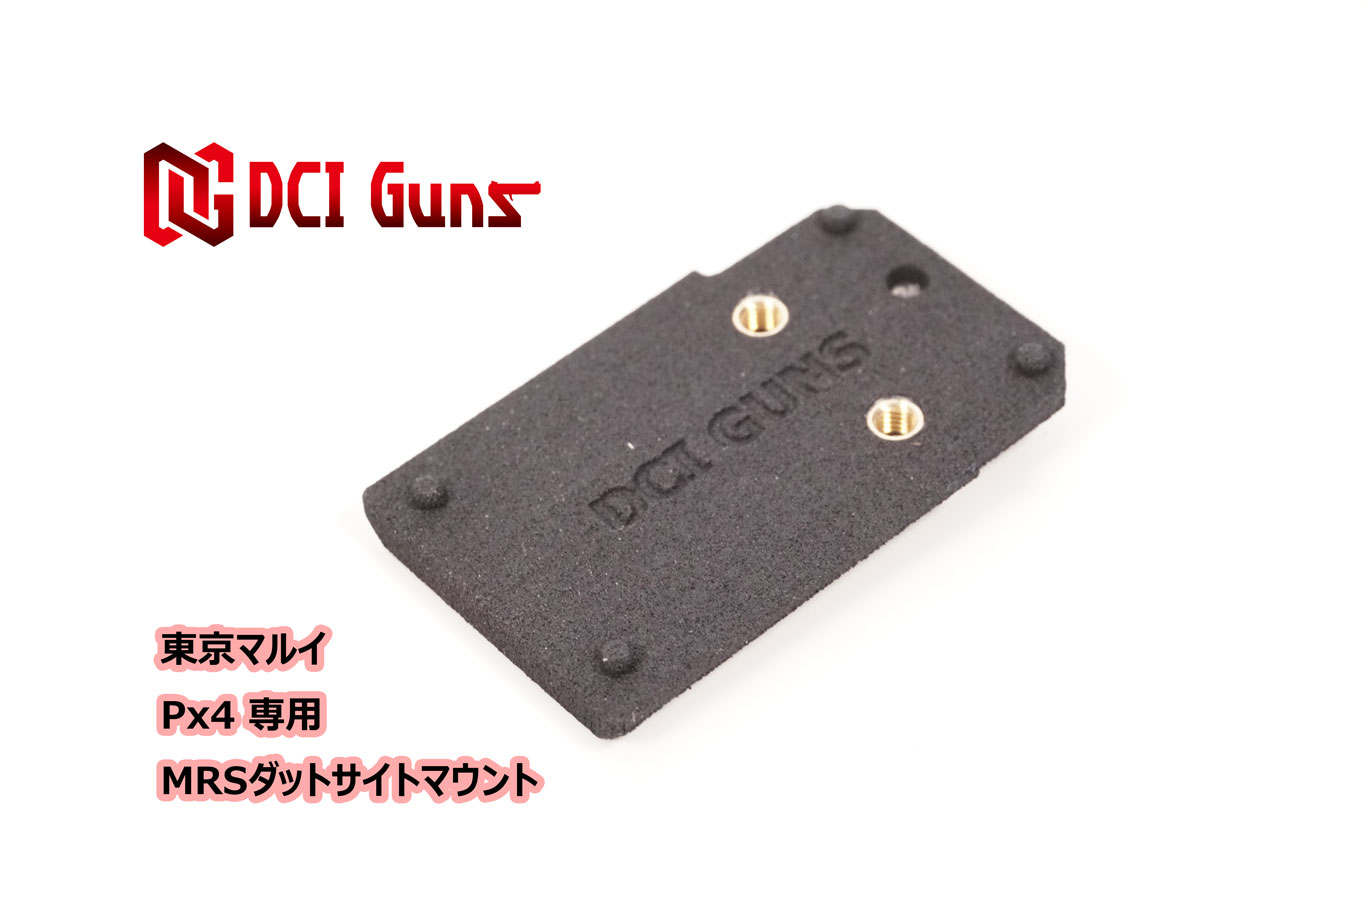 DCI Guns 東京マルイ Px4用MRSマウントV2.0 エアガン エアーガン ガスガン ブローバック カスタムパーツ ダットサイト ドットサイト 光学機器 スライド 直付け サバゲー サバイバルゲーム